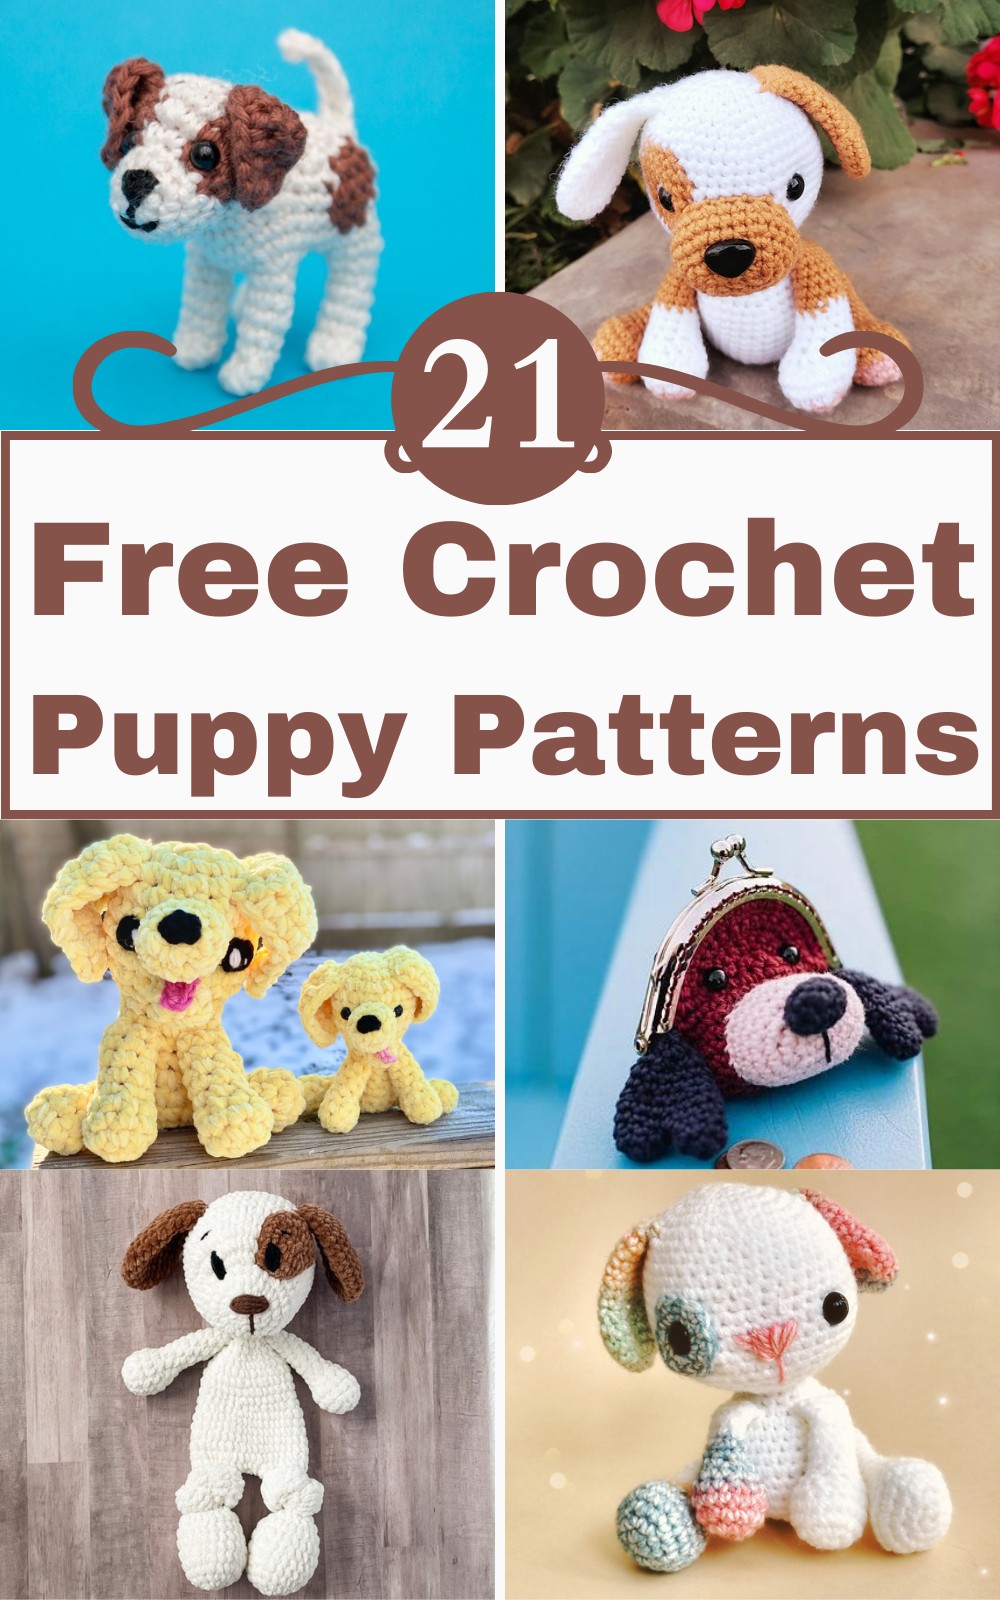 5 Free Crochet Puppy Patterns